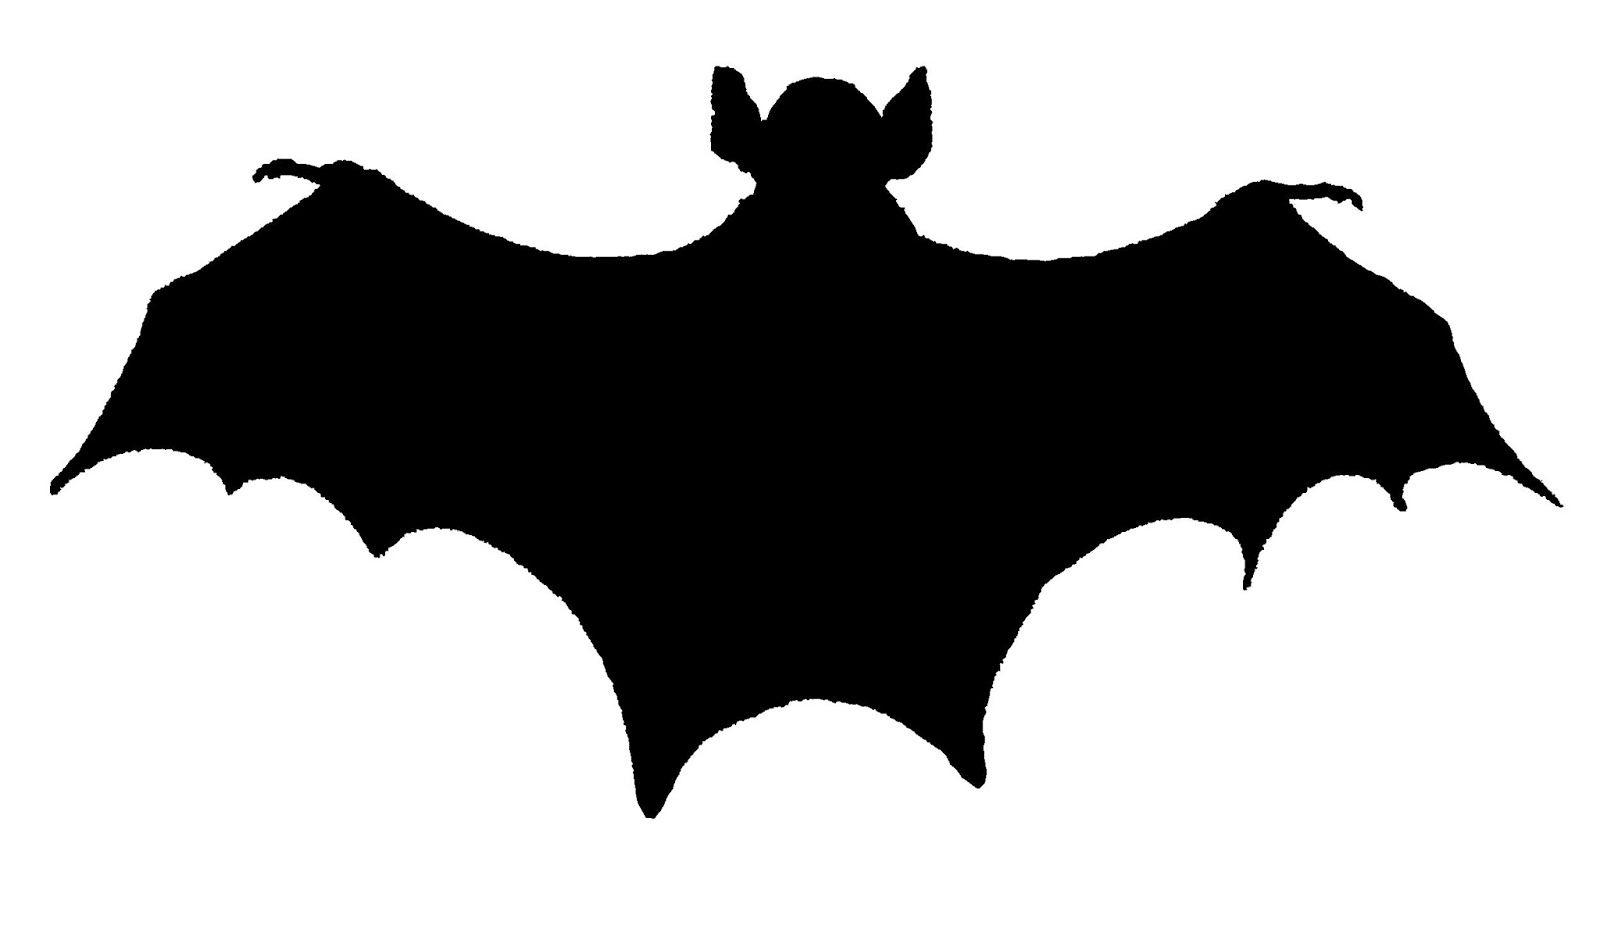 Bat Silhouette Images for Logo - Digital Stamp Design: Royalty Free Halloween Bat Silhouette Crafting